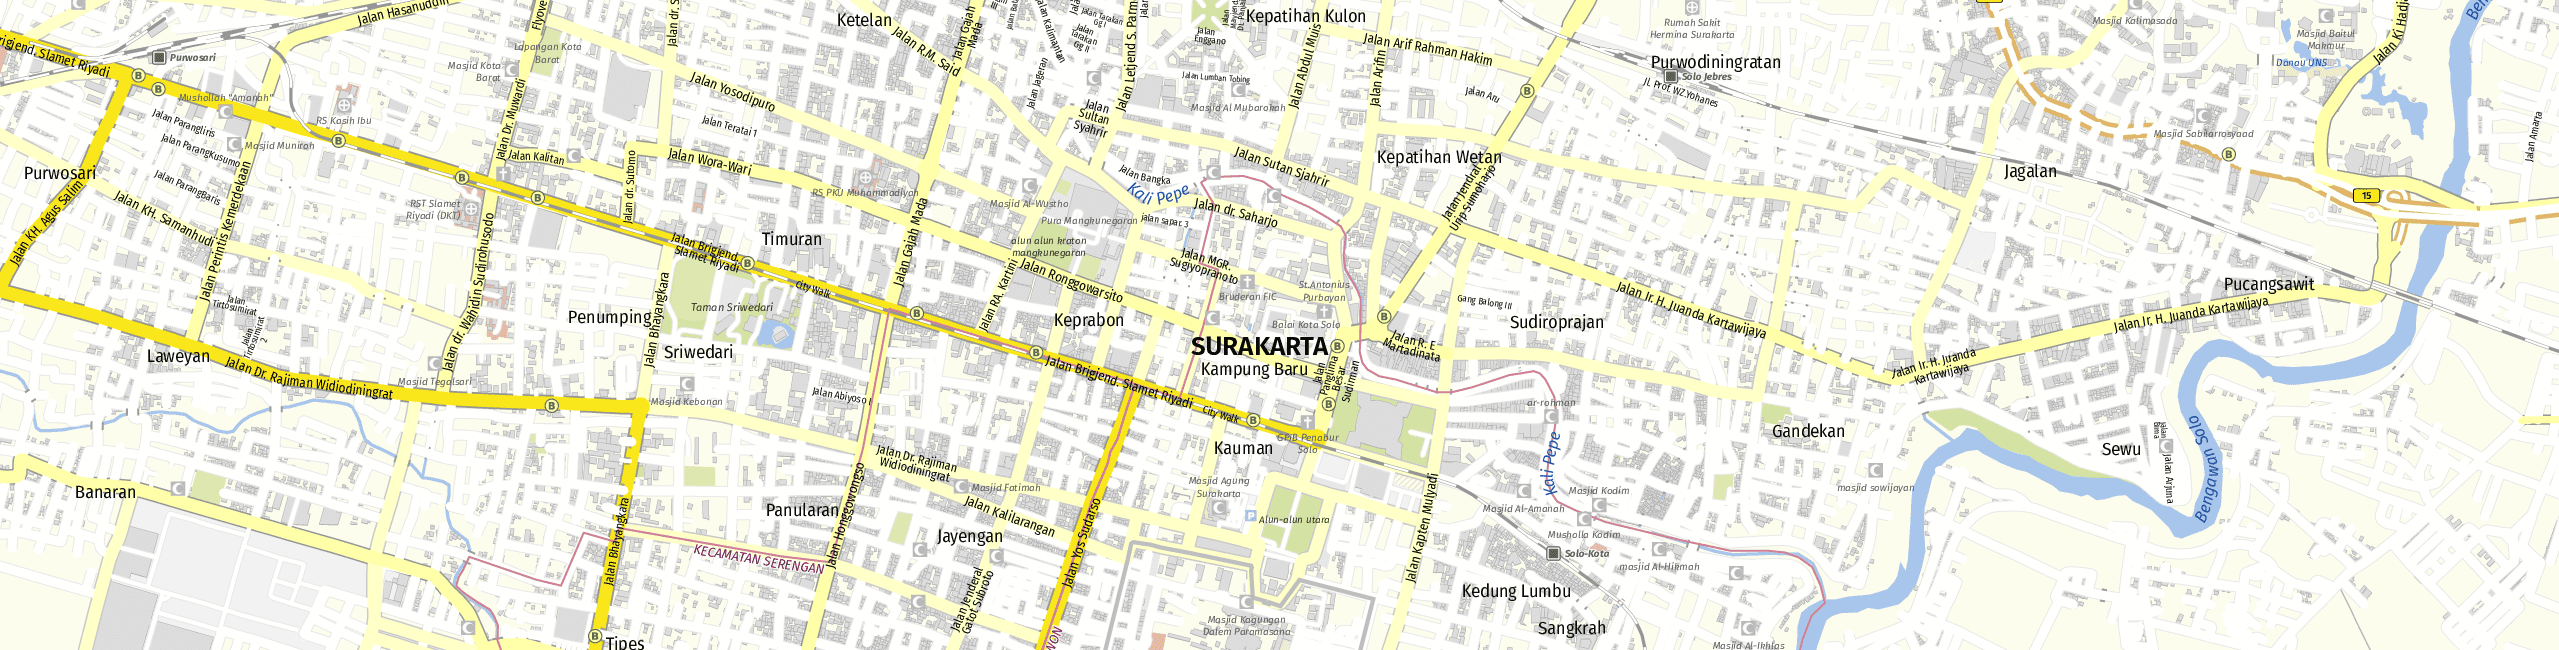 Stadtplan Surakarta zum Downloaden.